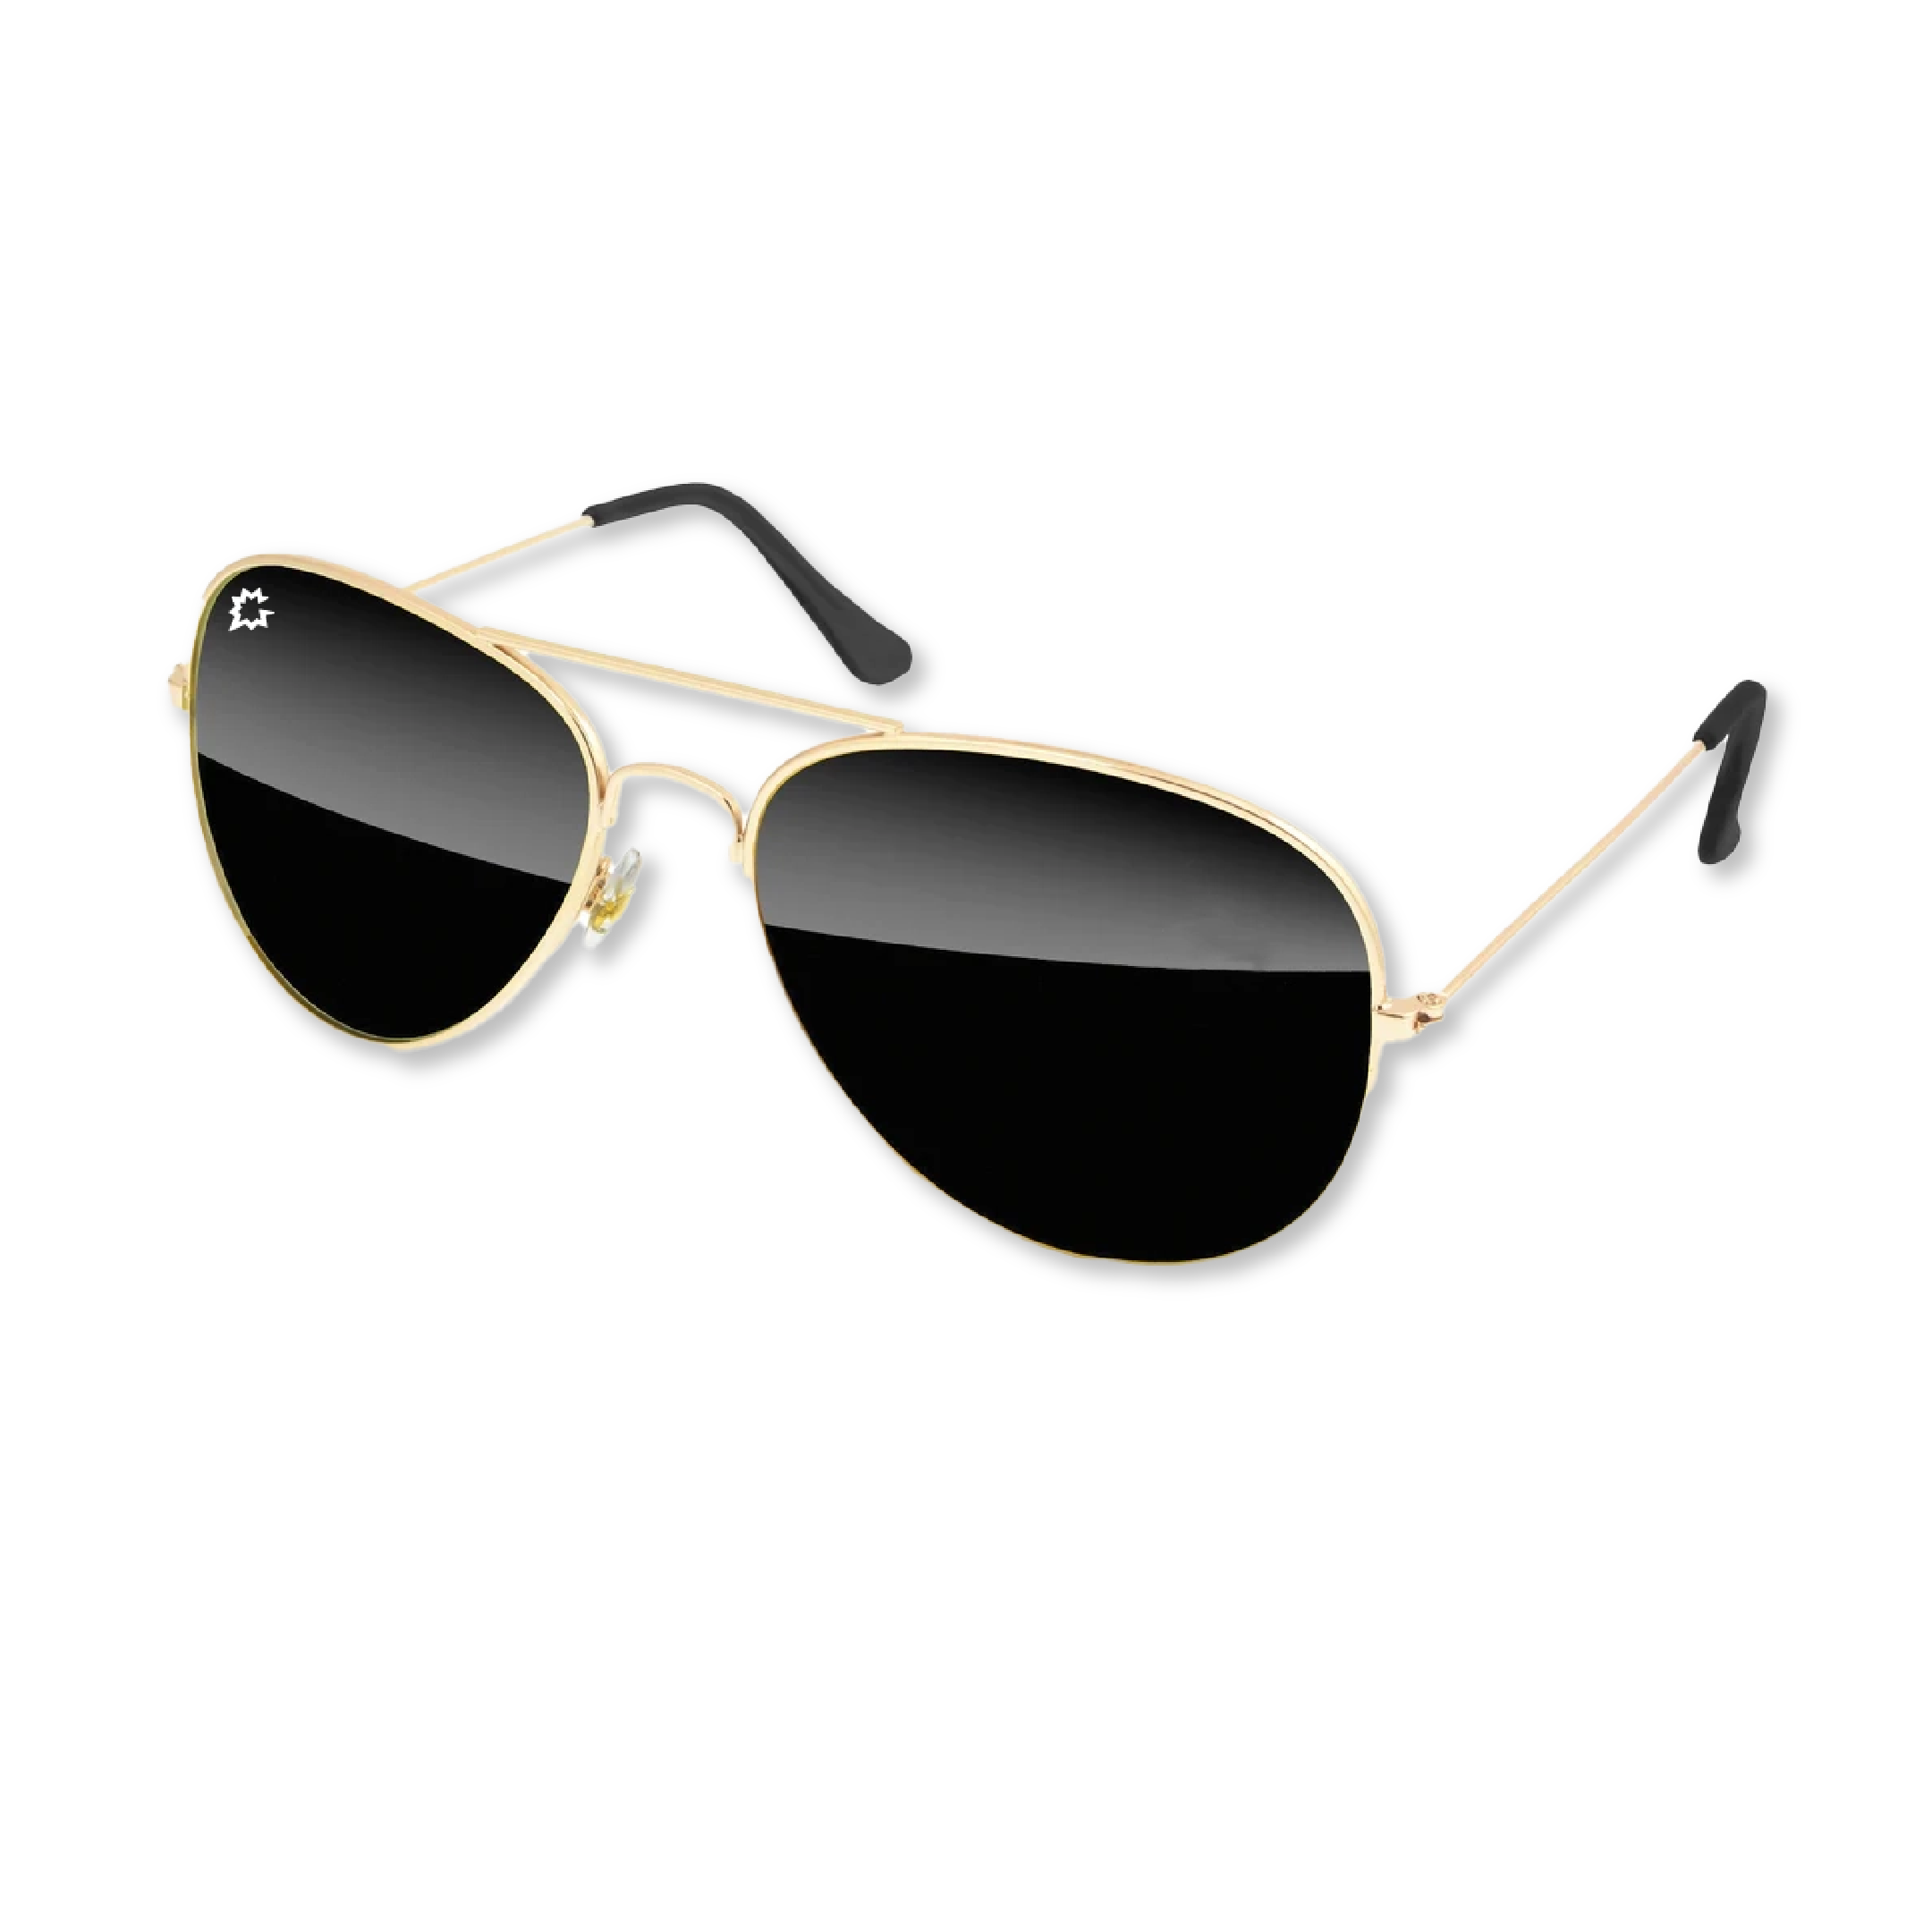 Gong Aviators - Sunglasses + Microfiber Pouch